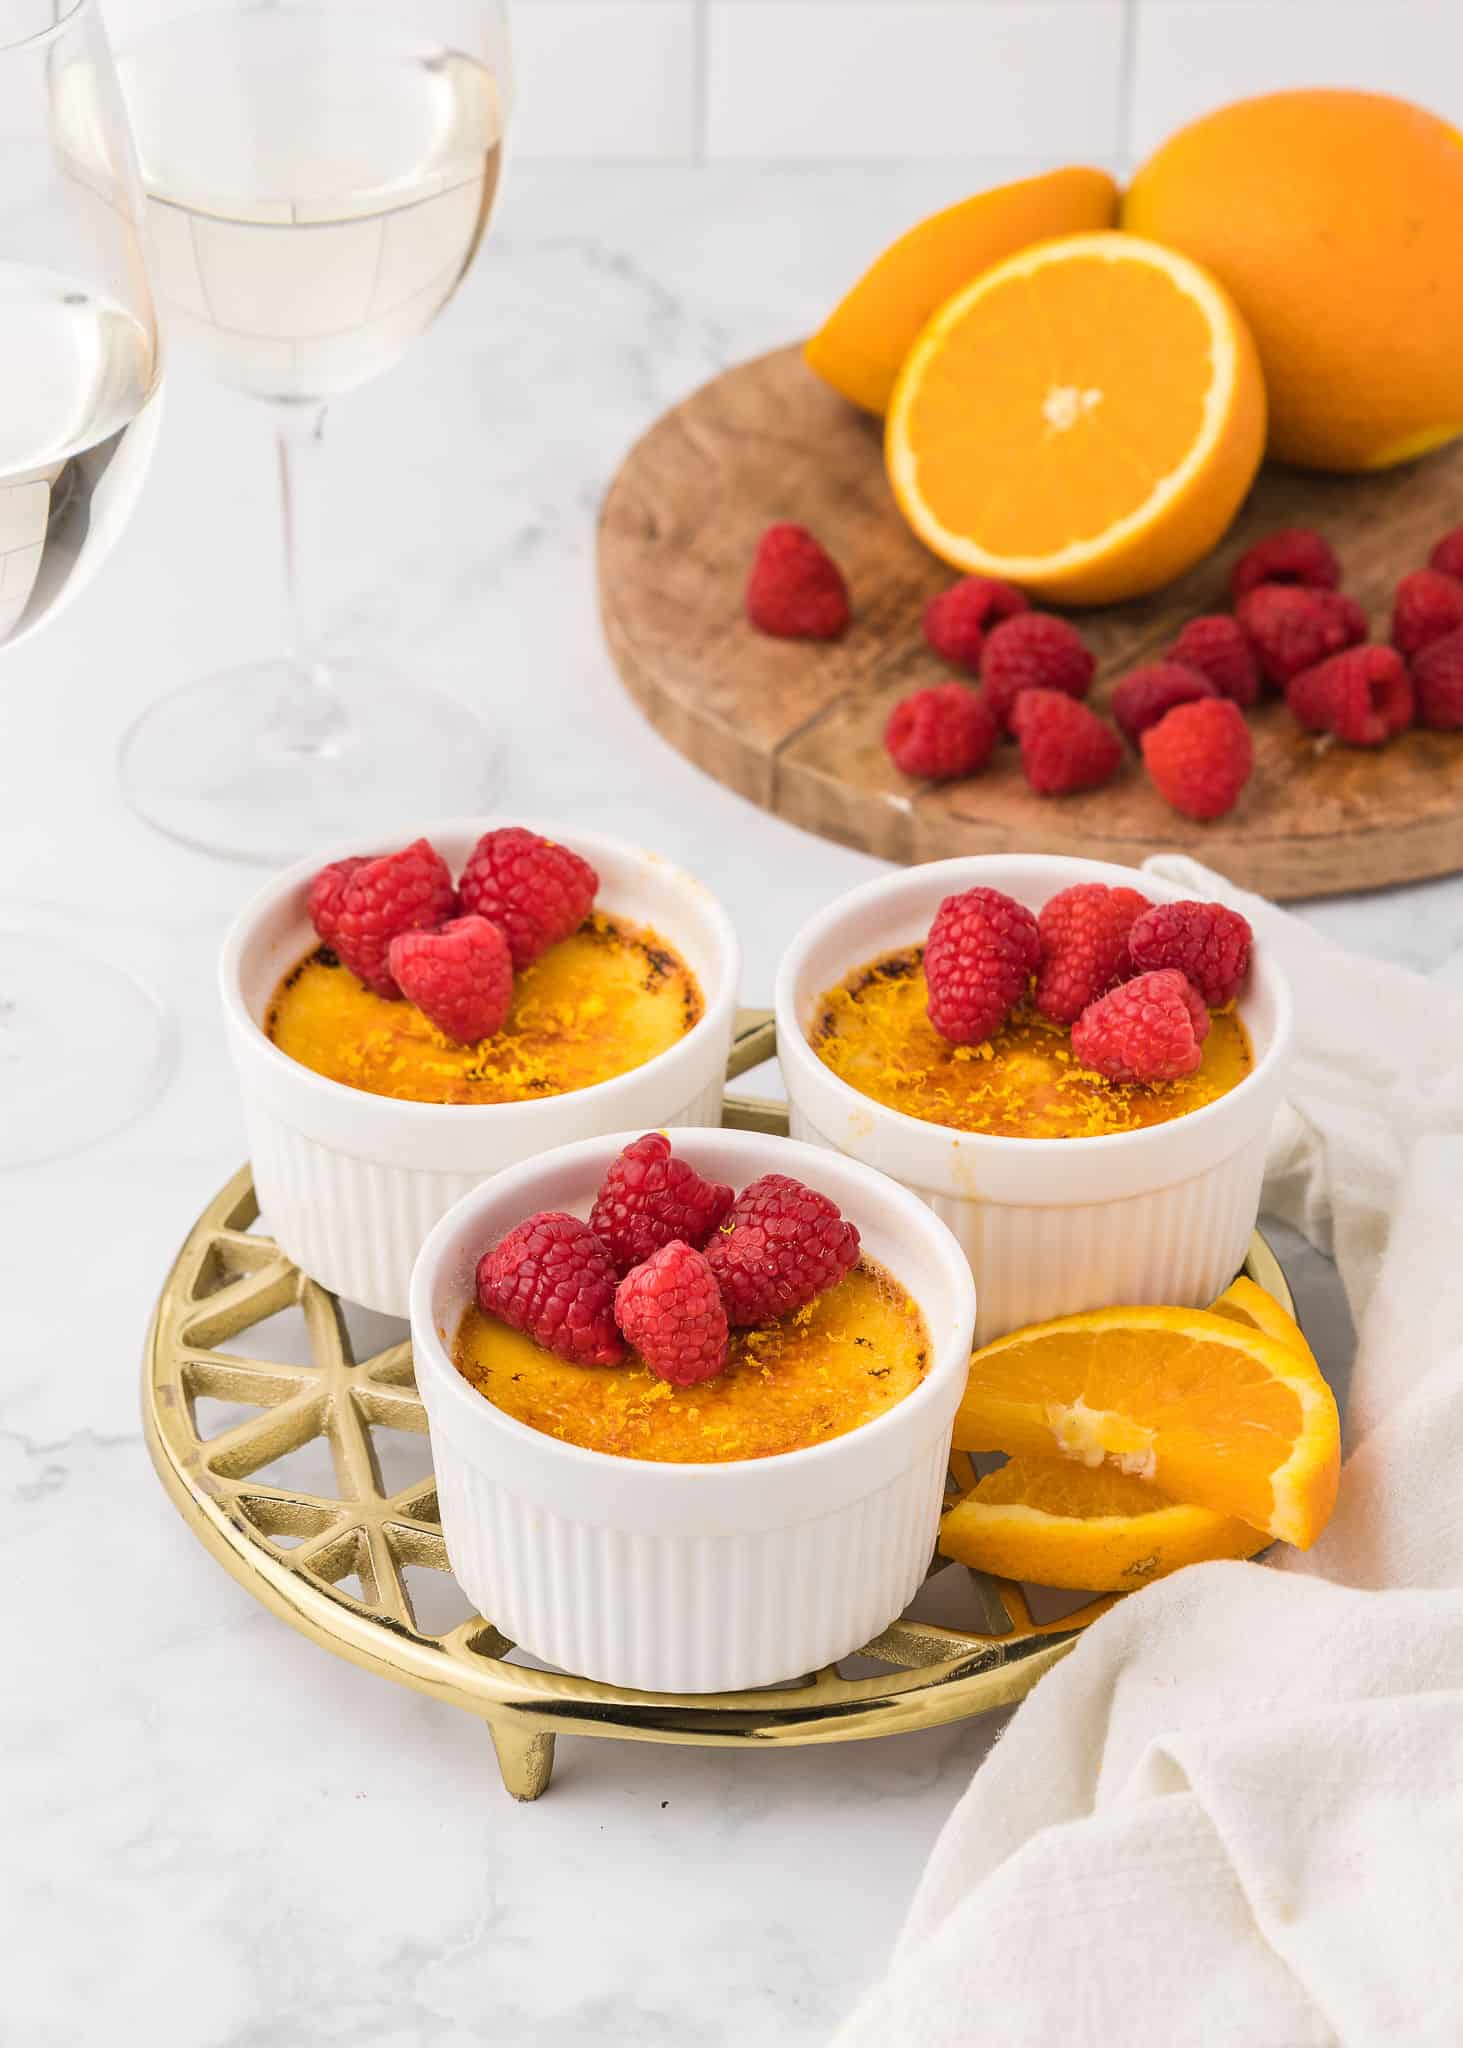 Honey-Orange Crème Brûlée with Raspberries (lighter orange creme brulee recipe)